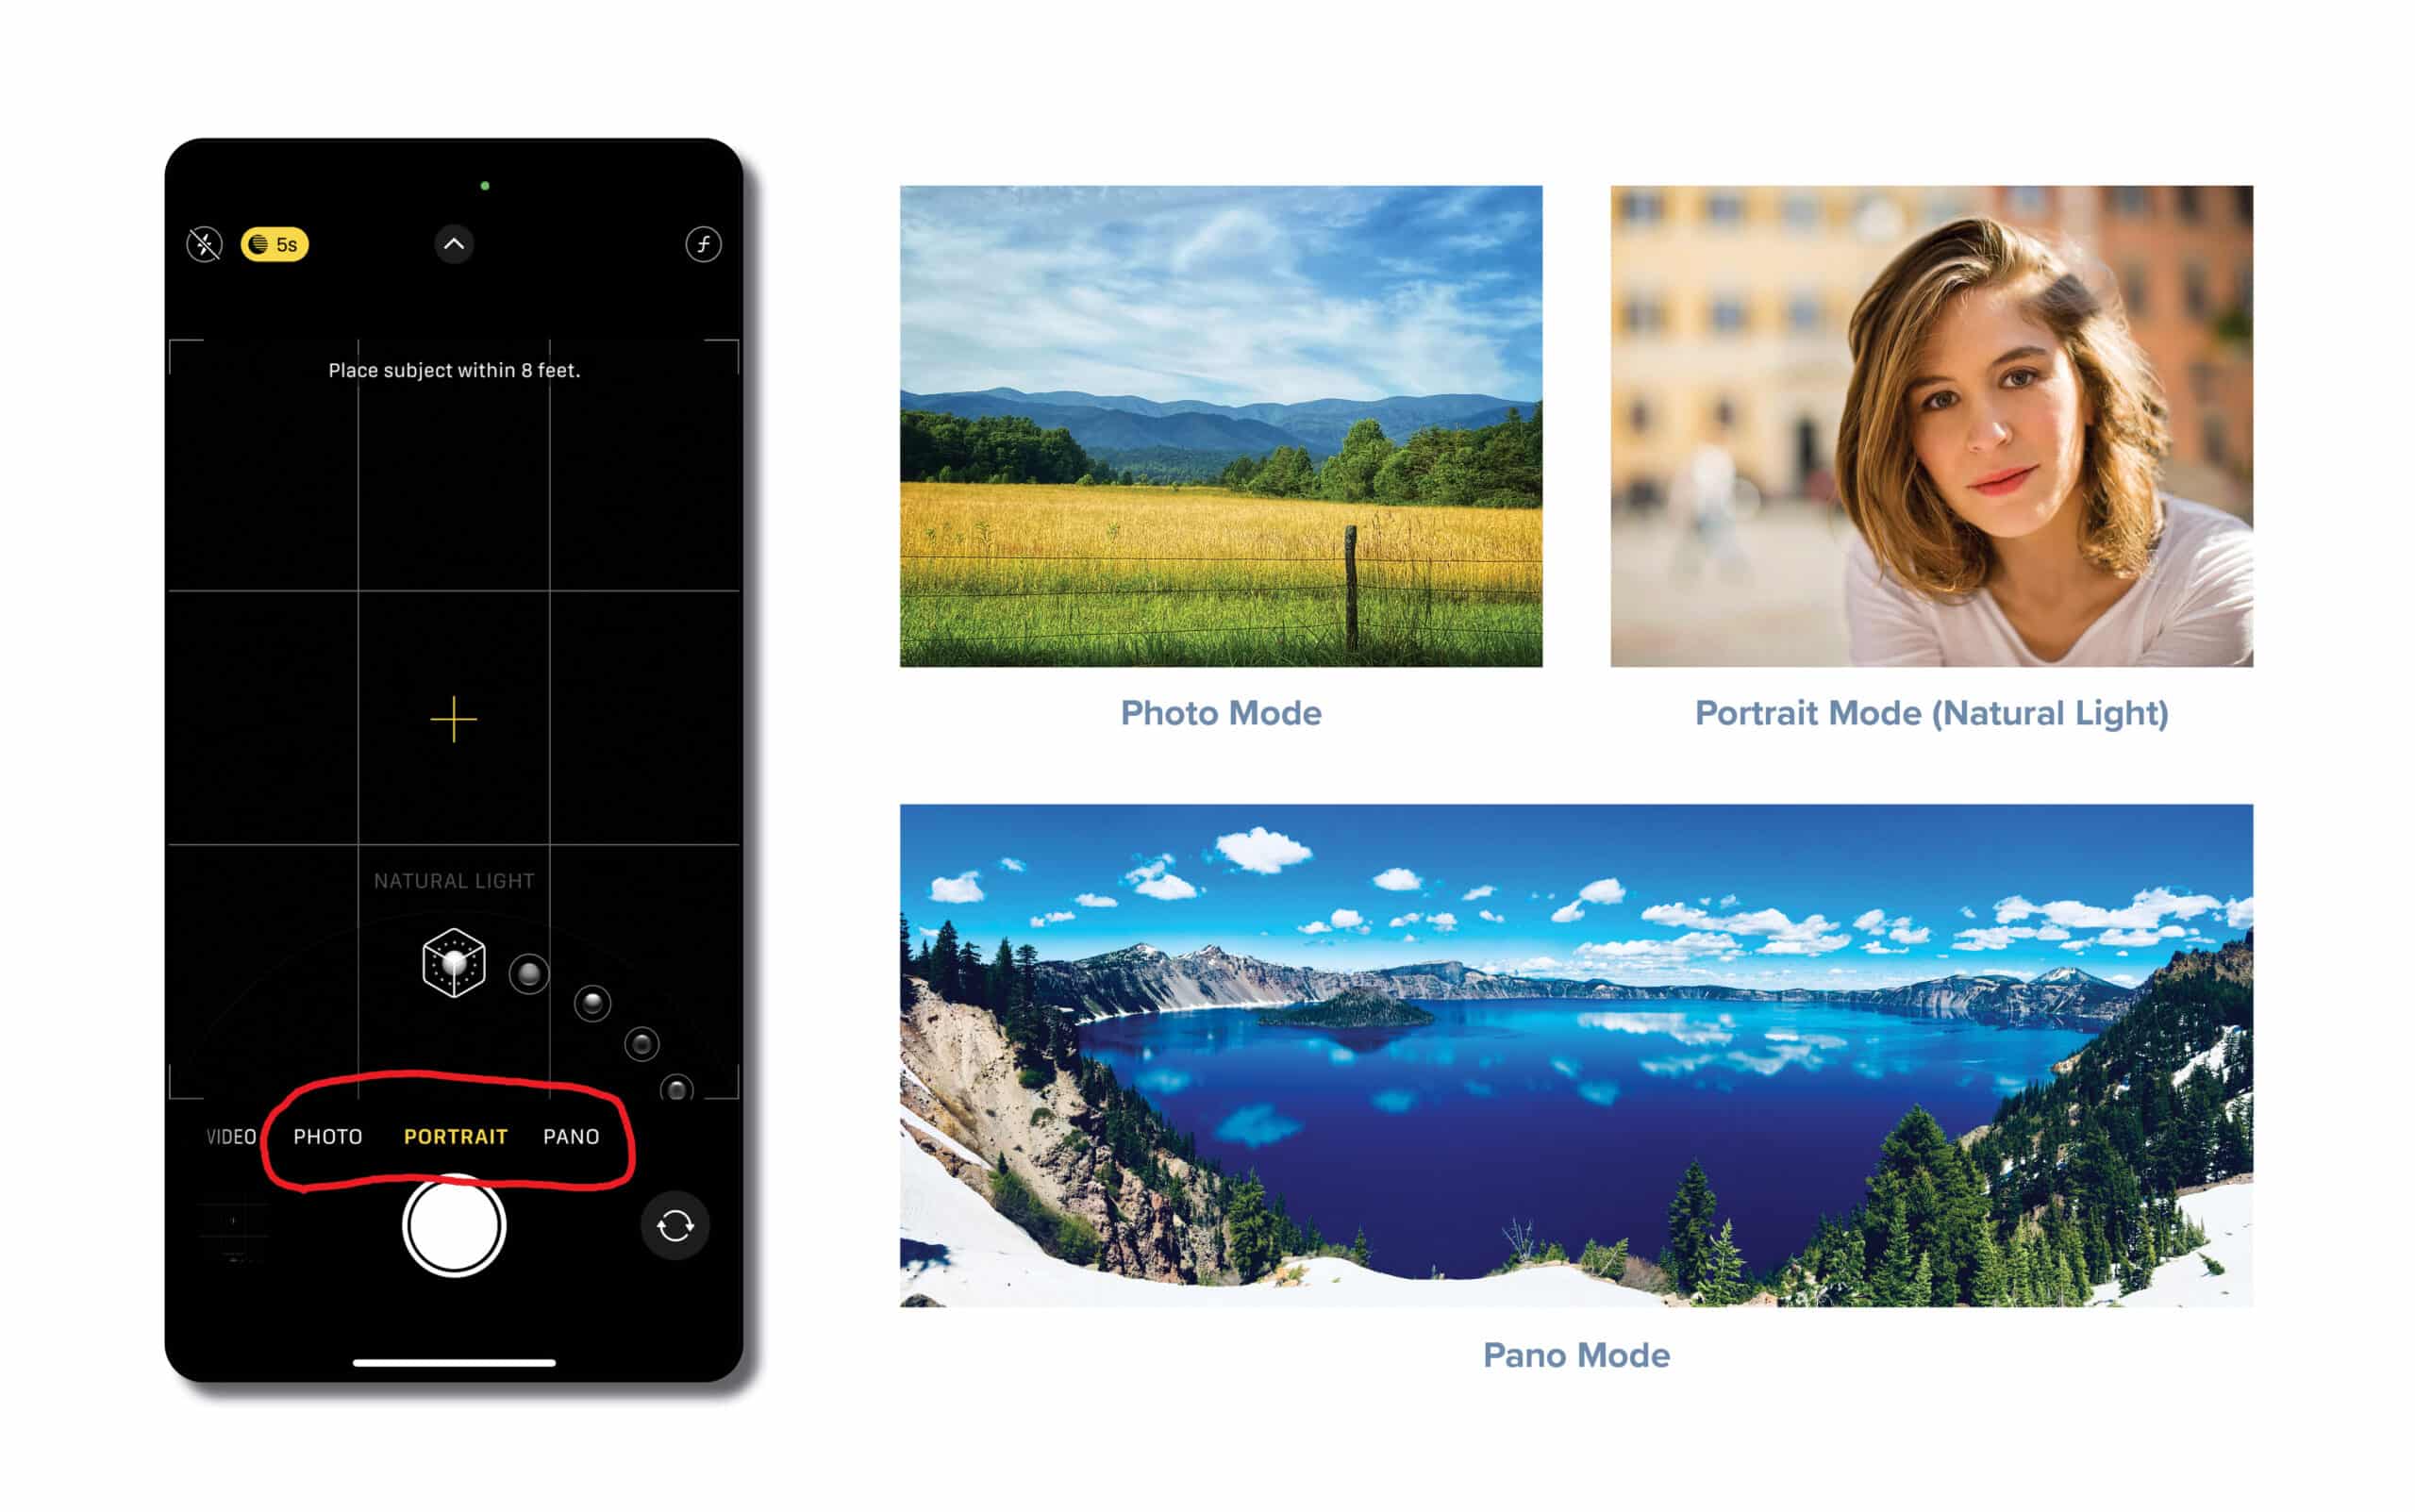 iphone camera modes for photos